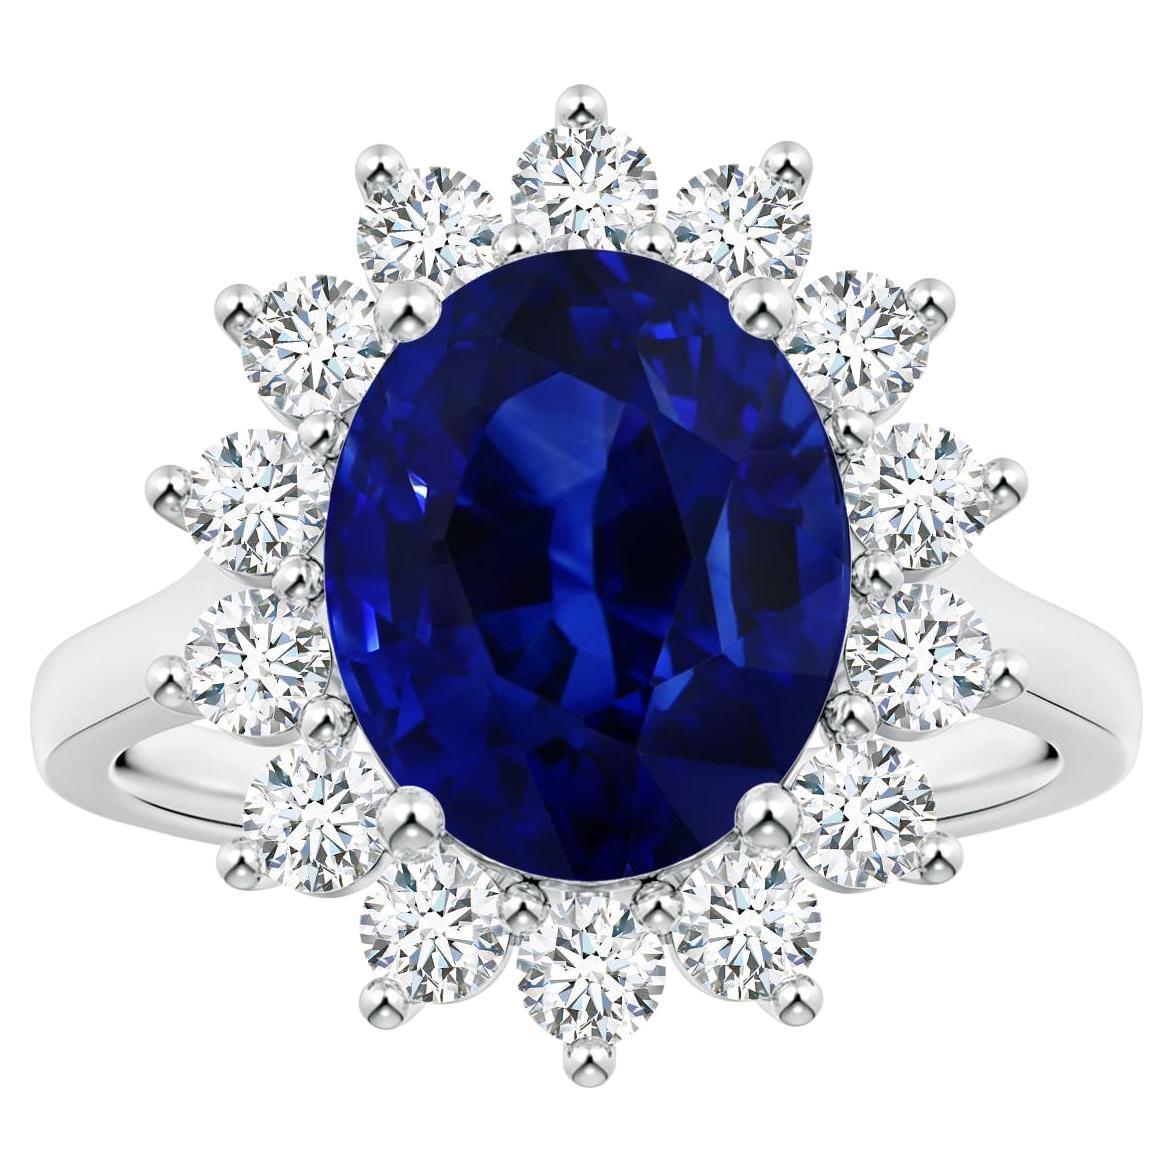 Angara Princess Diana Inspired Gia Certified Blue Sapphire Halo Ring in Platinum